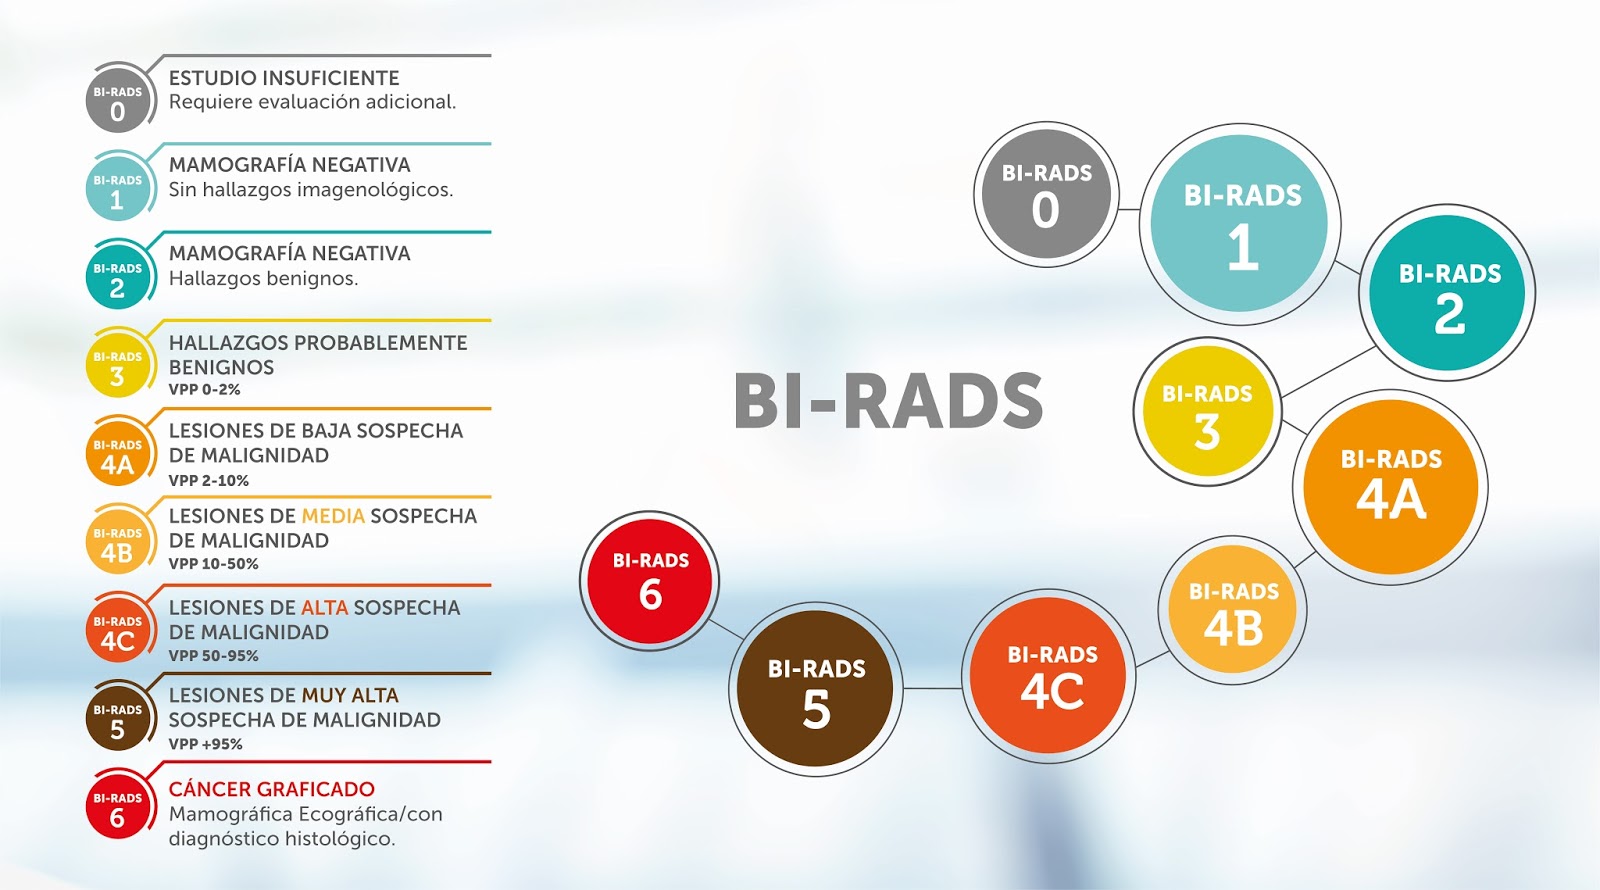 Bl rads 2. Маммография классификация bi-rads. Маммограмма заключение bi-rads 2. Фиброзно кистозная мастопатия молочной железы bi-rads-4a. Классификация bi rads.